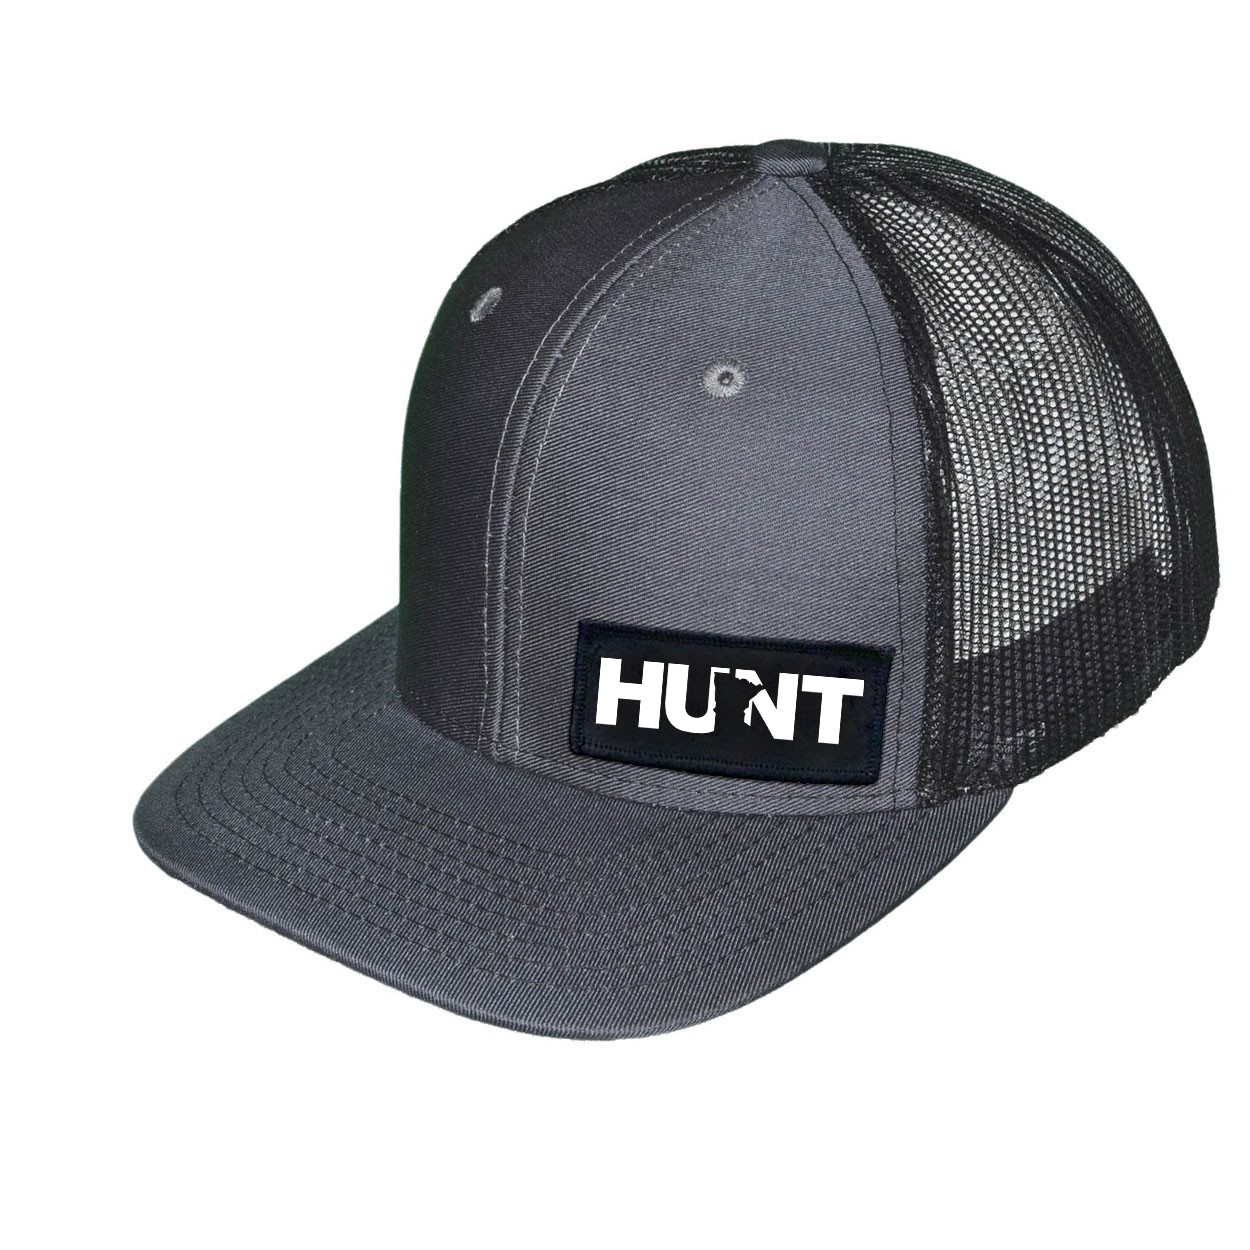 Hunt Minnesota Night Out Woven Patch Snapback Trucker Hat Gray/Black (White Logo)